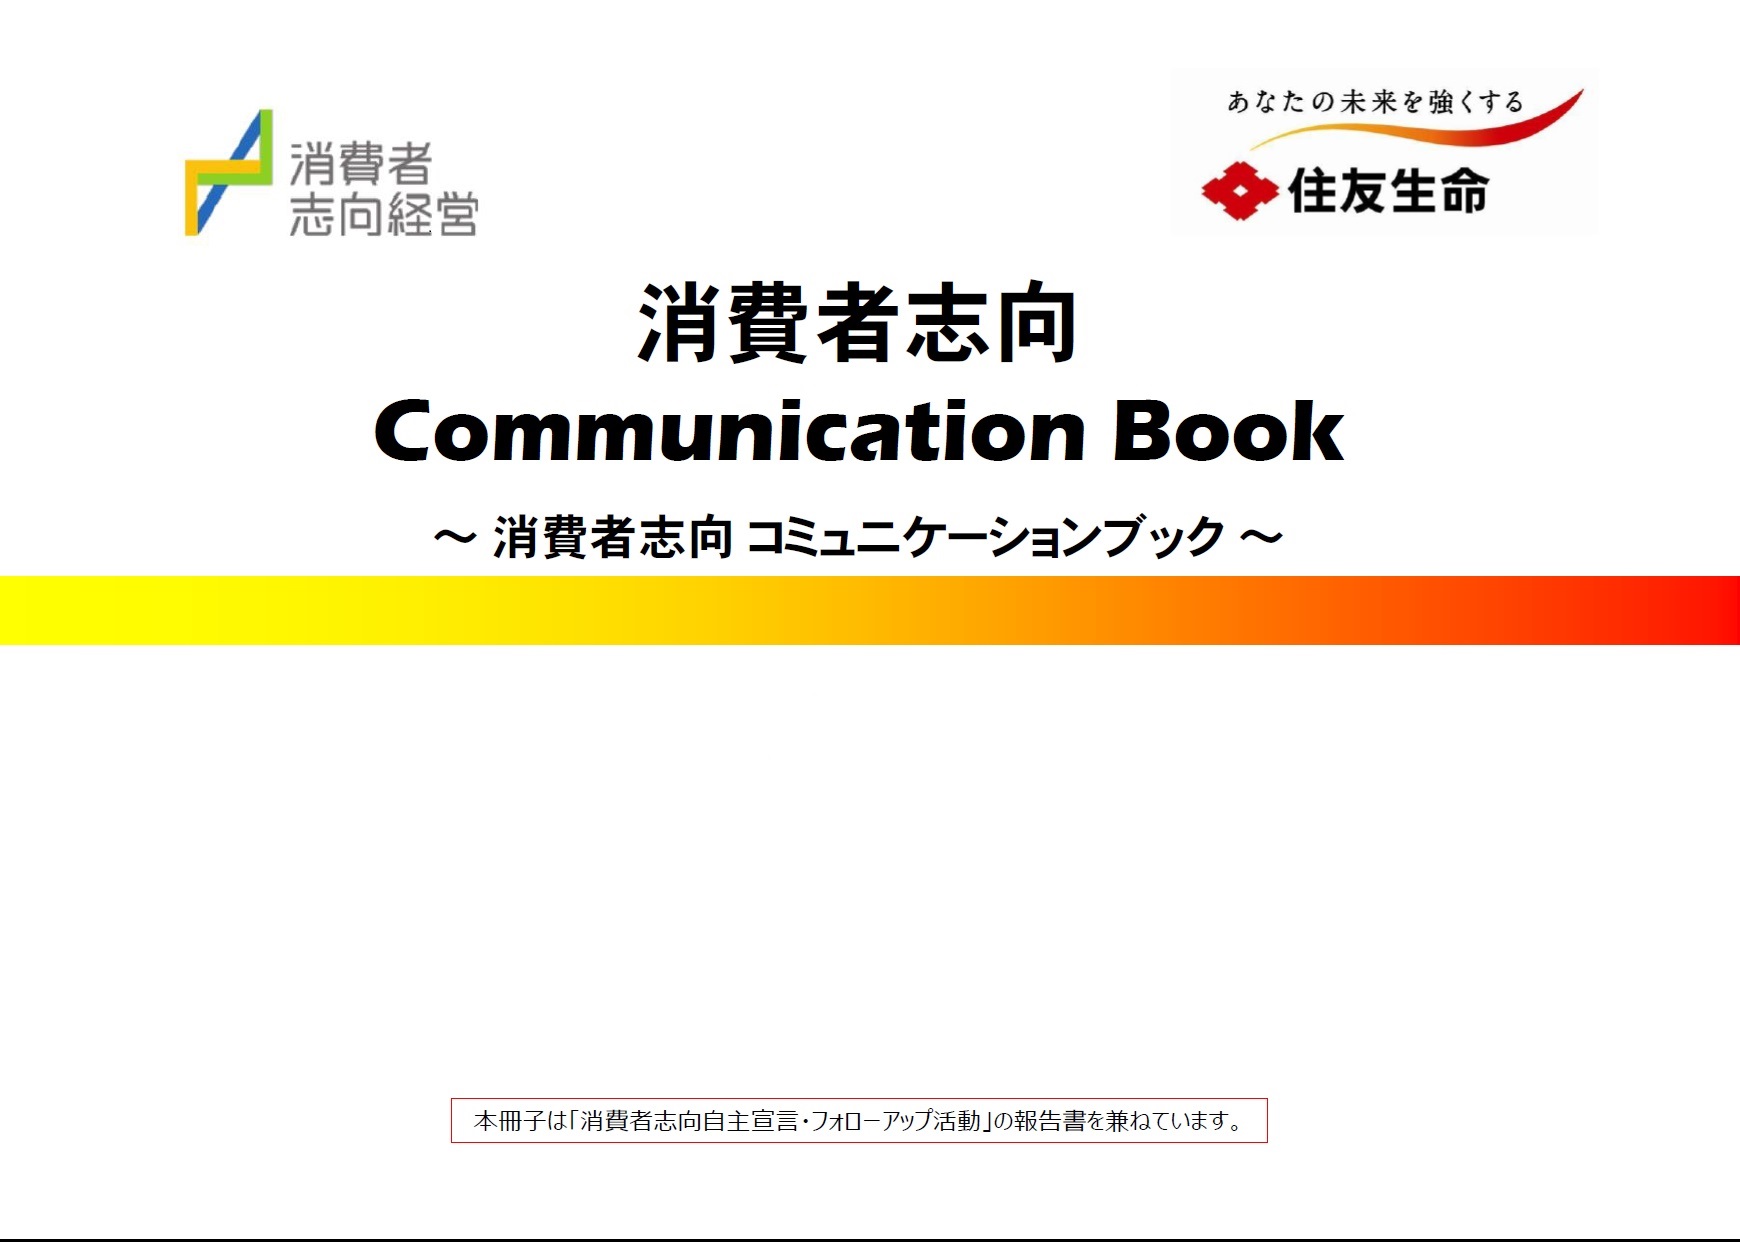 communicationbook.png